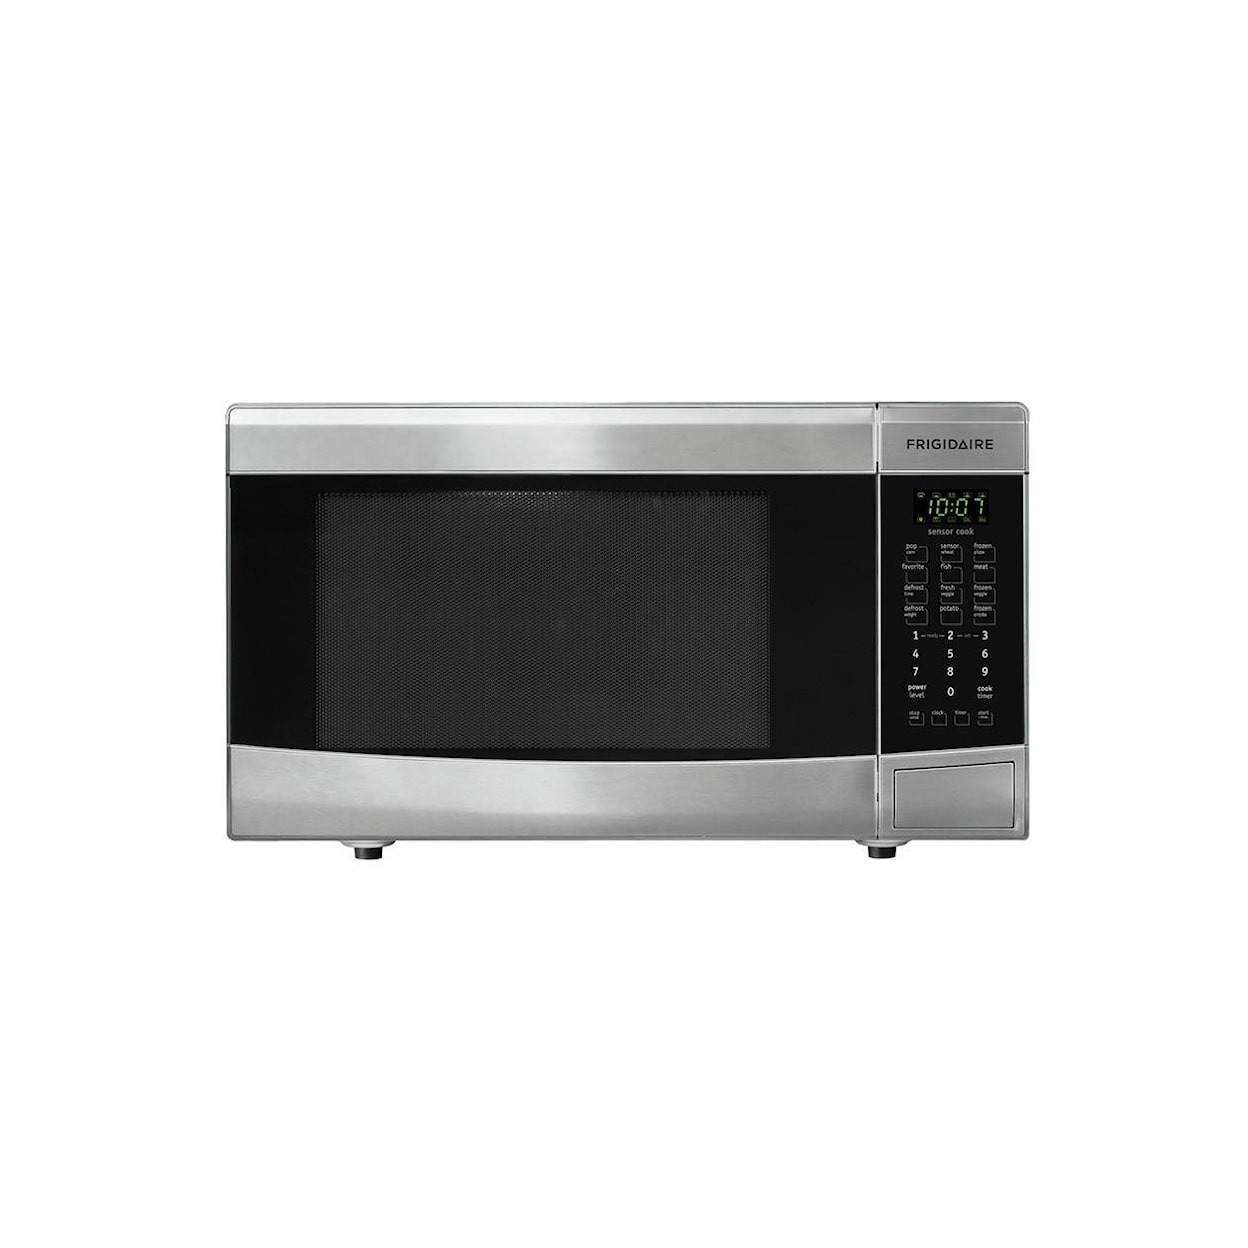 Frigidaire Microwave Countertop Microwave